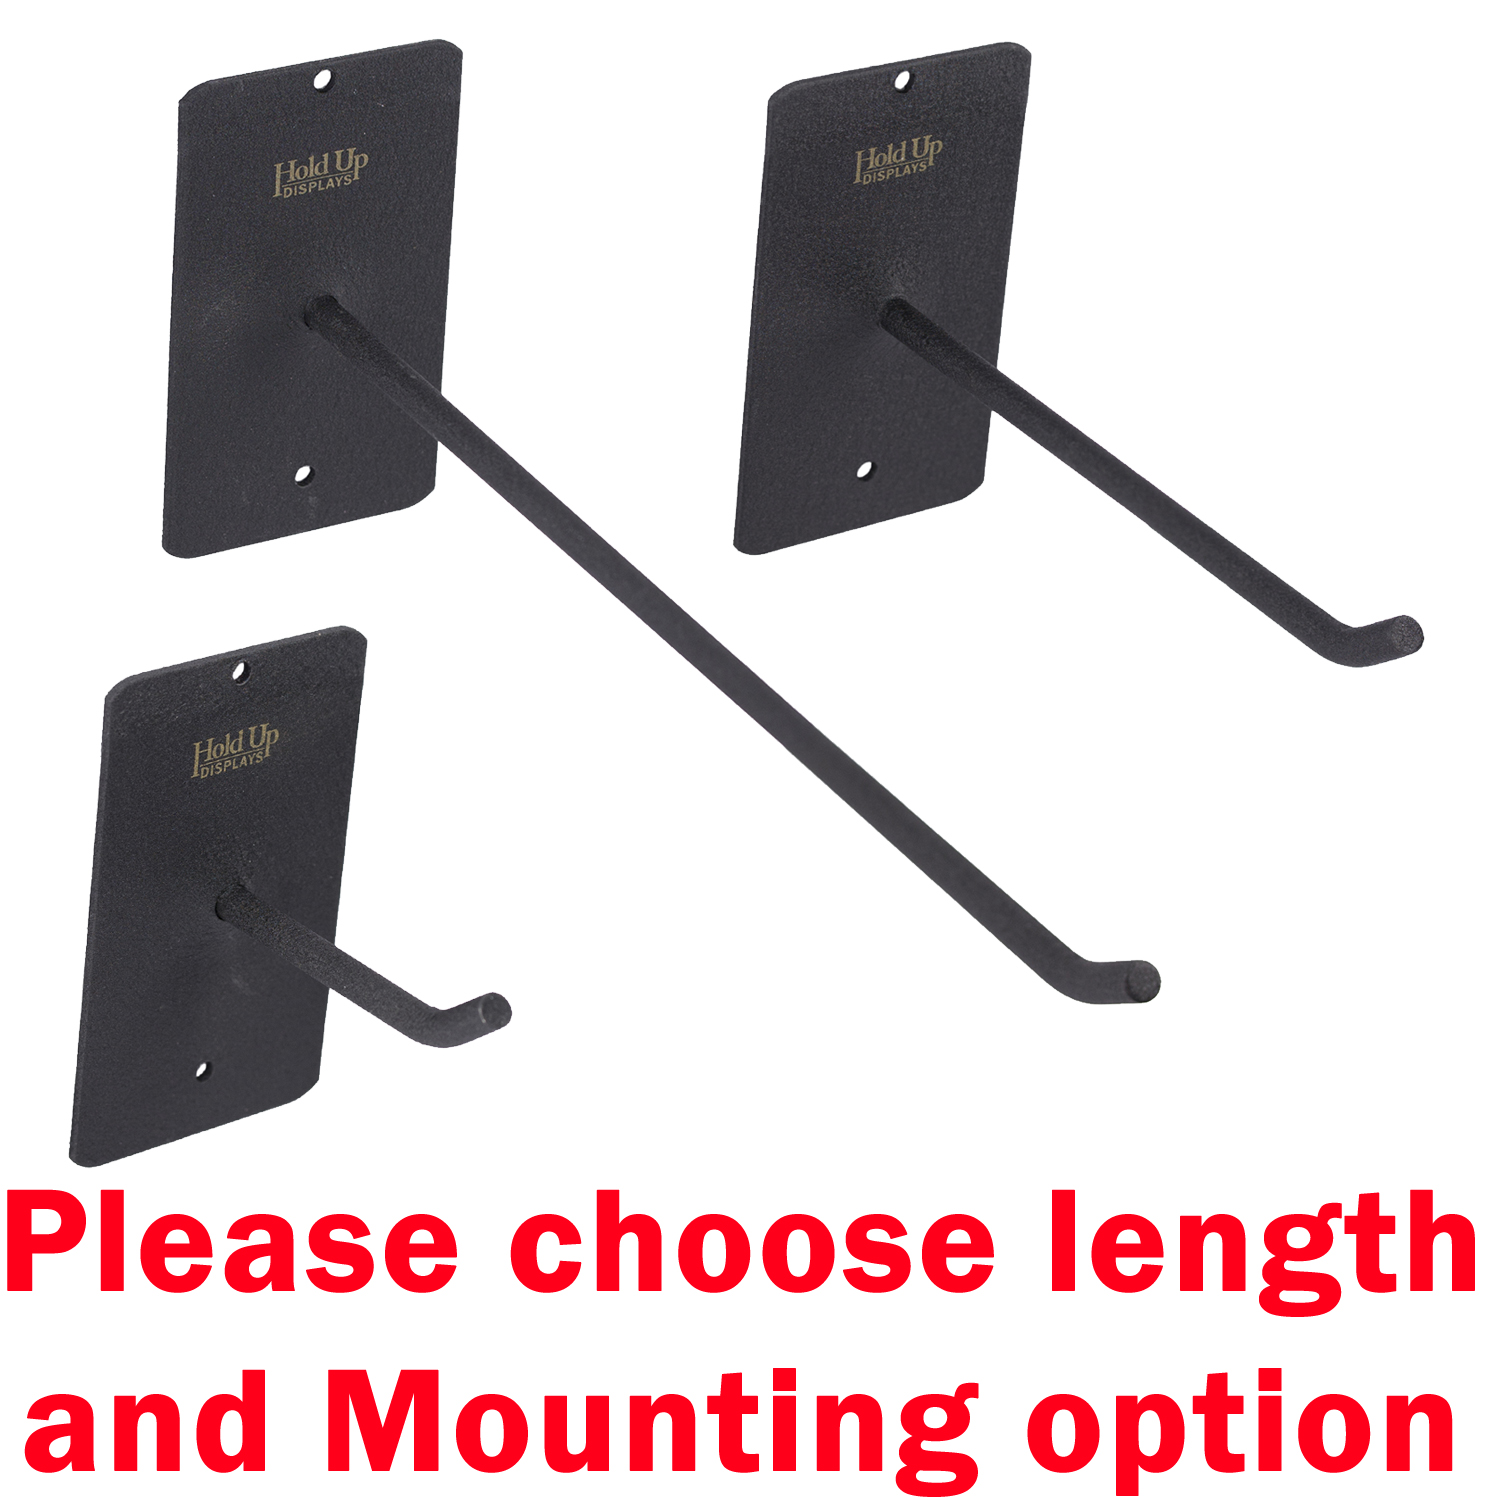 Wall Mount Display Hooks, Store Display Hooks